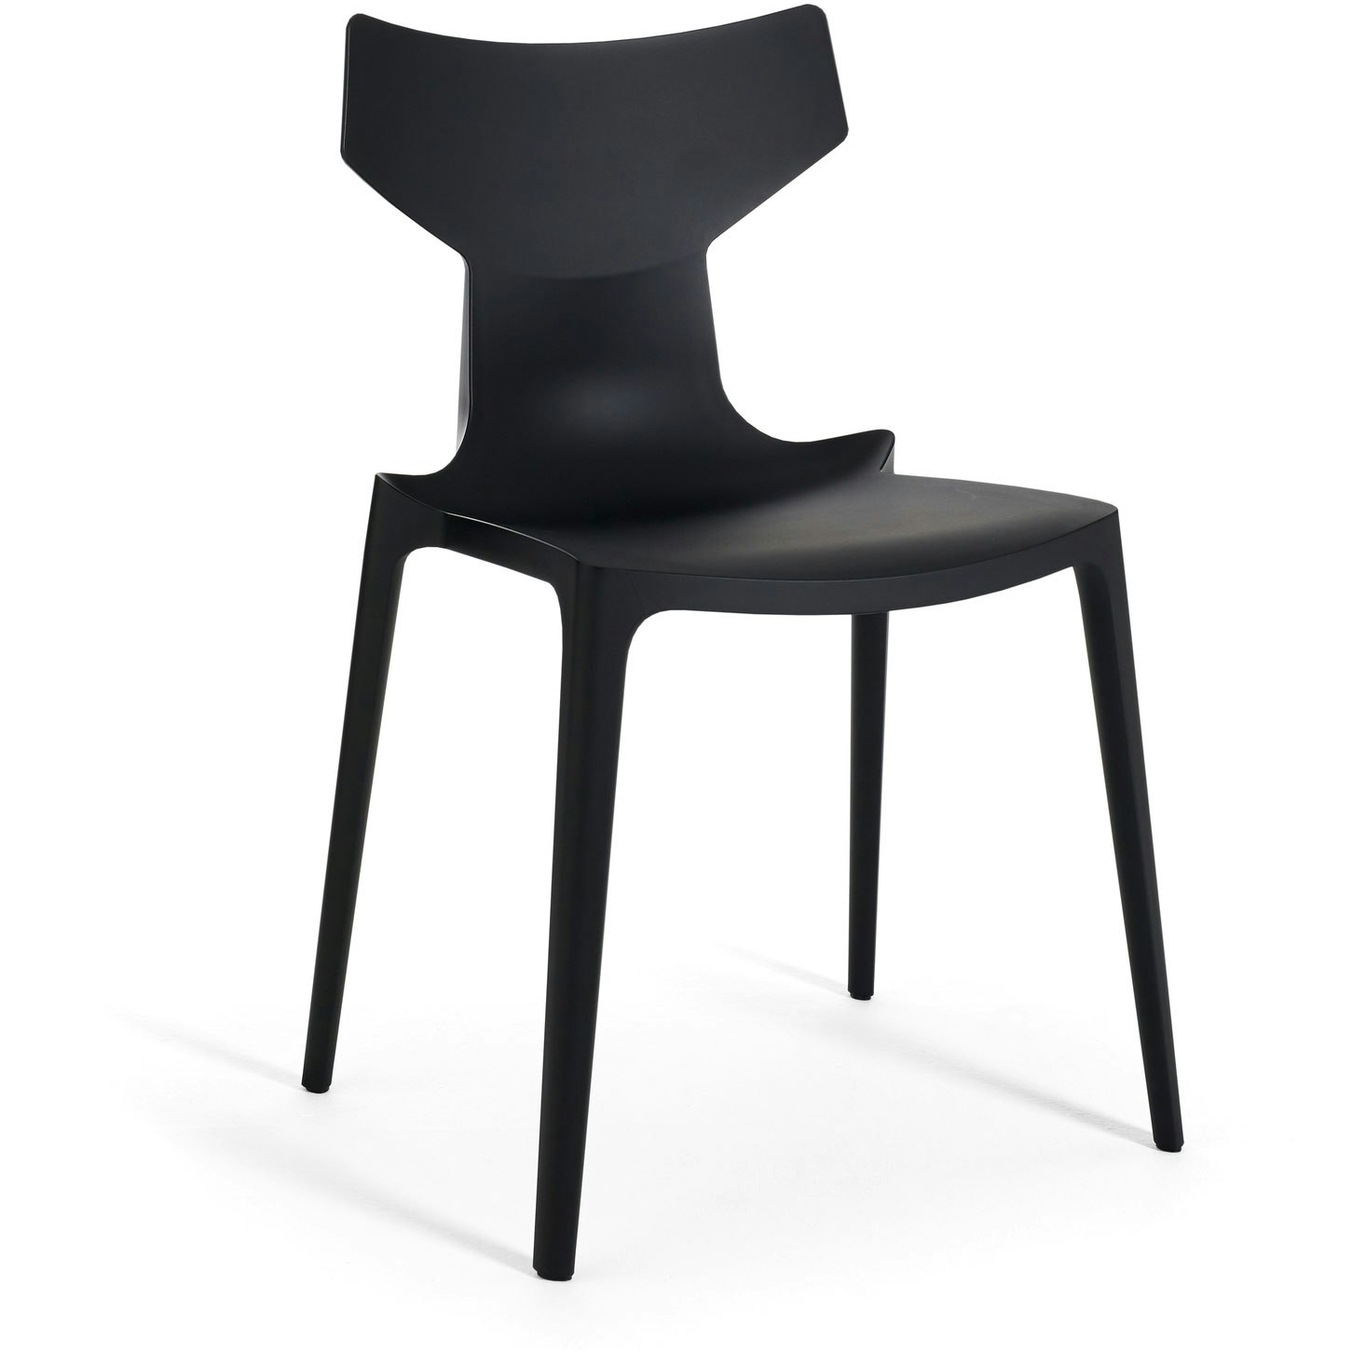 Re-Chair Tuoli by Illy, Matt Black